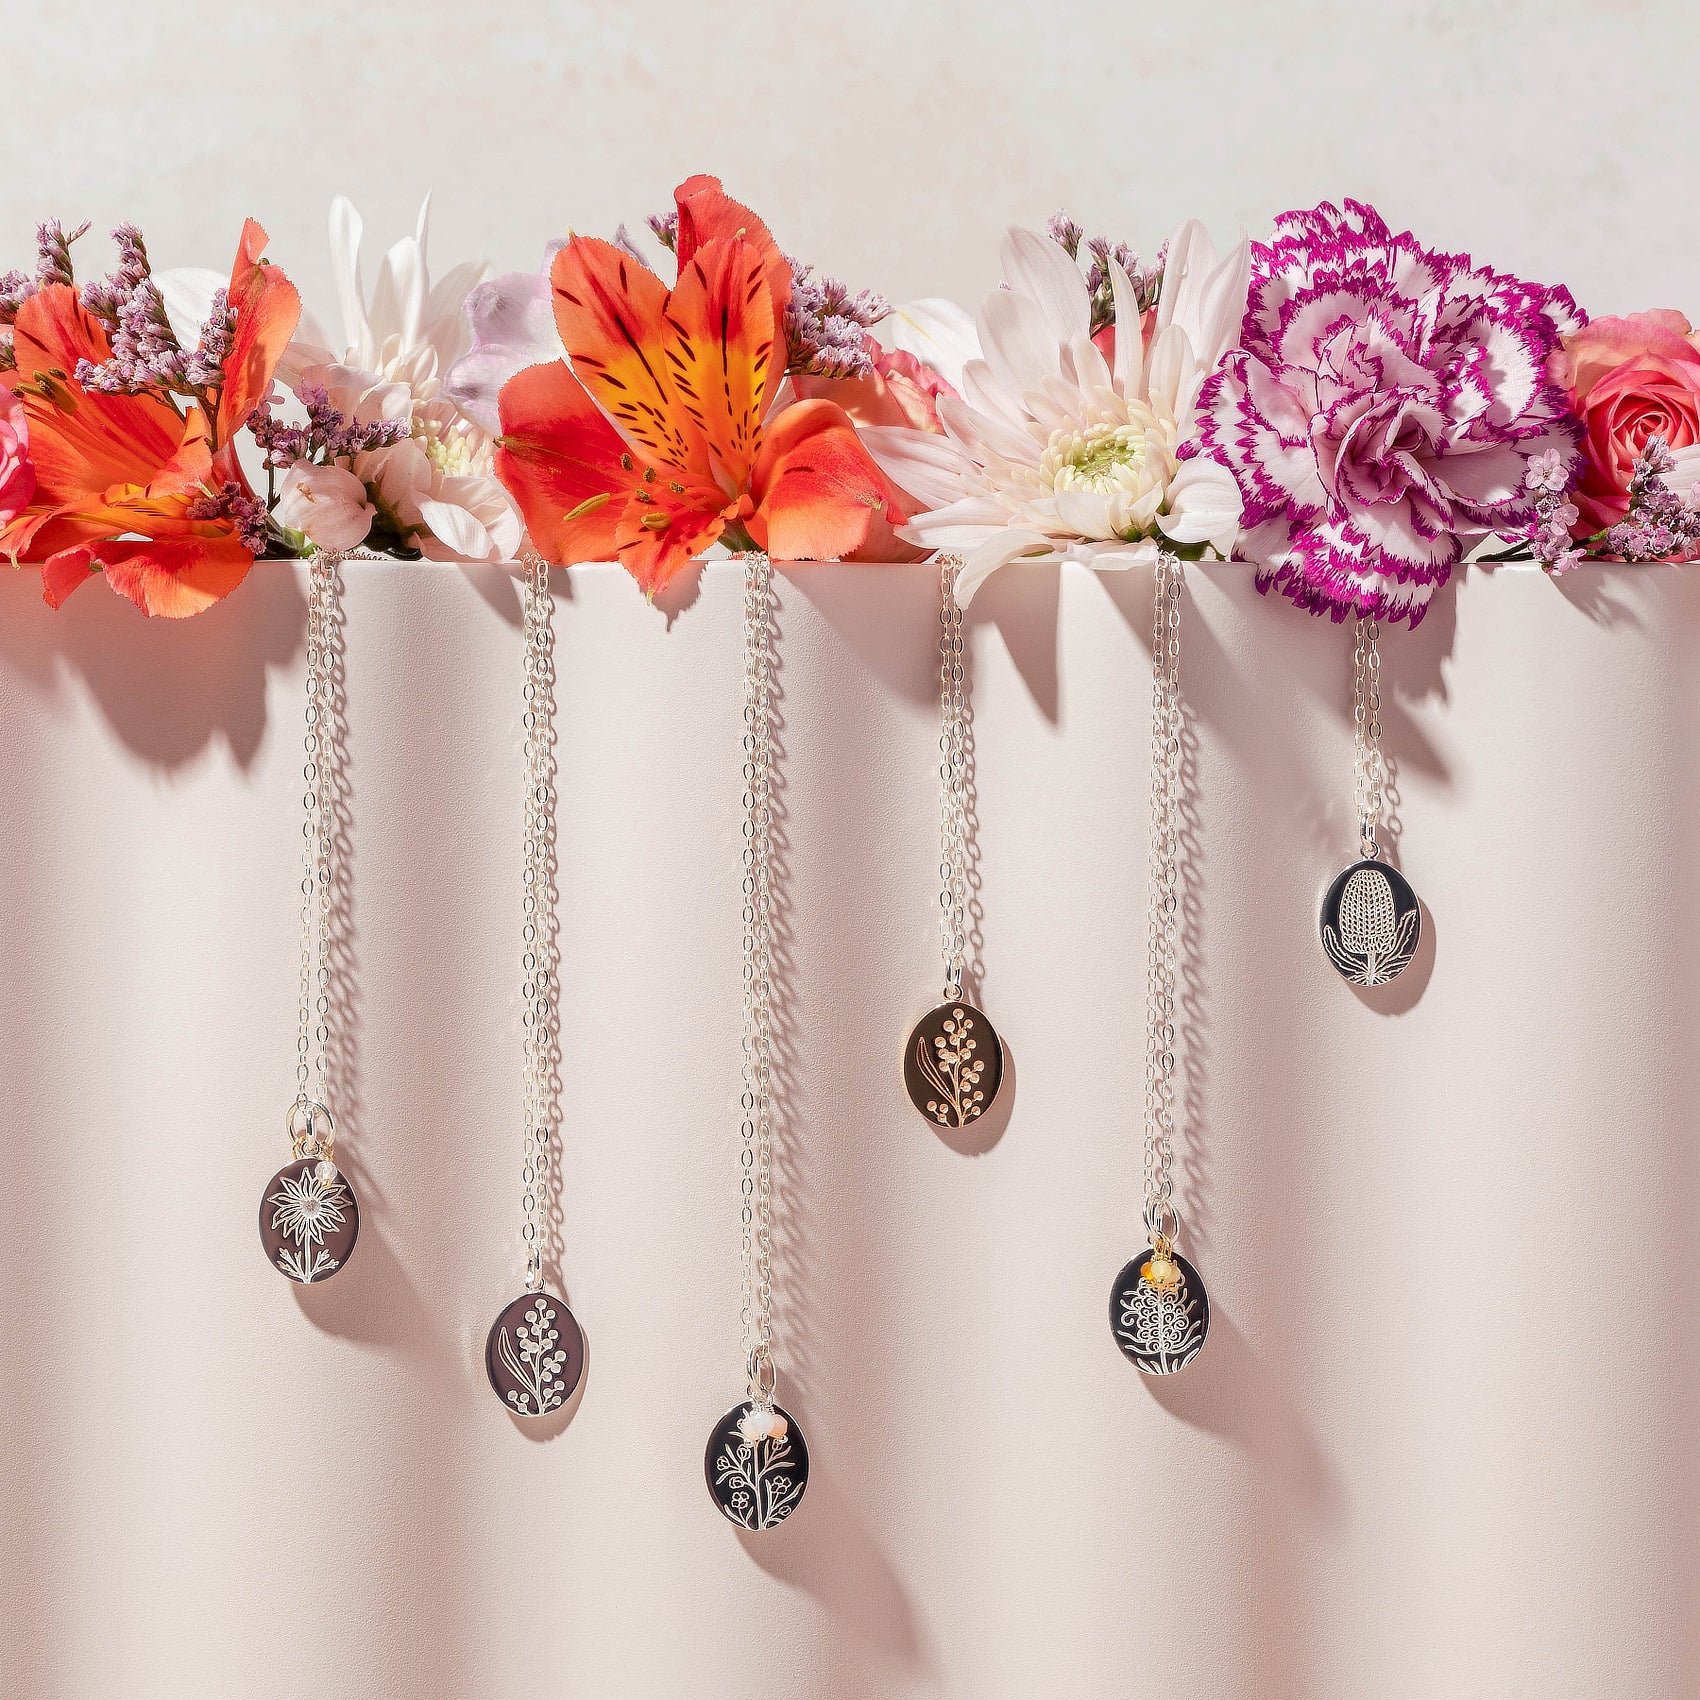 Banksia Oval Silver Pendant Necklace - Simone Walsh Jewellery Australia